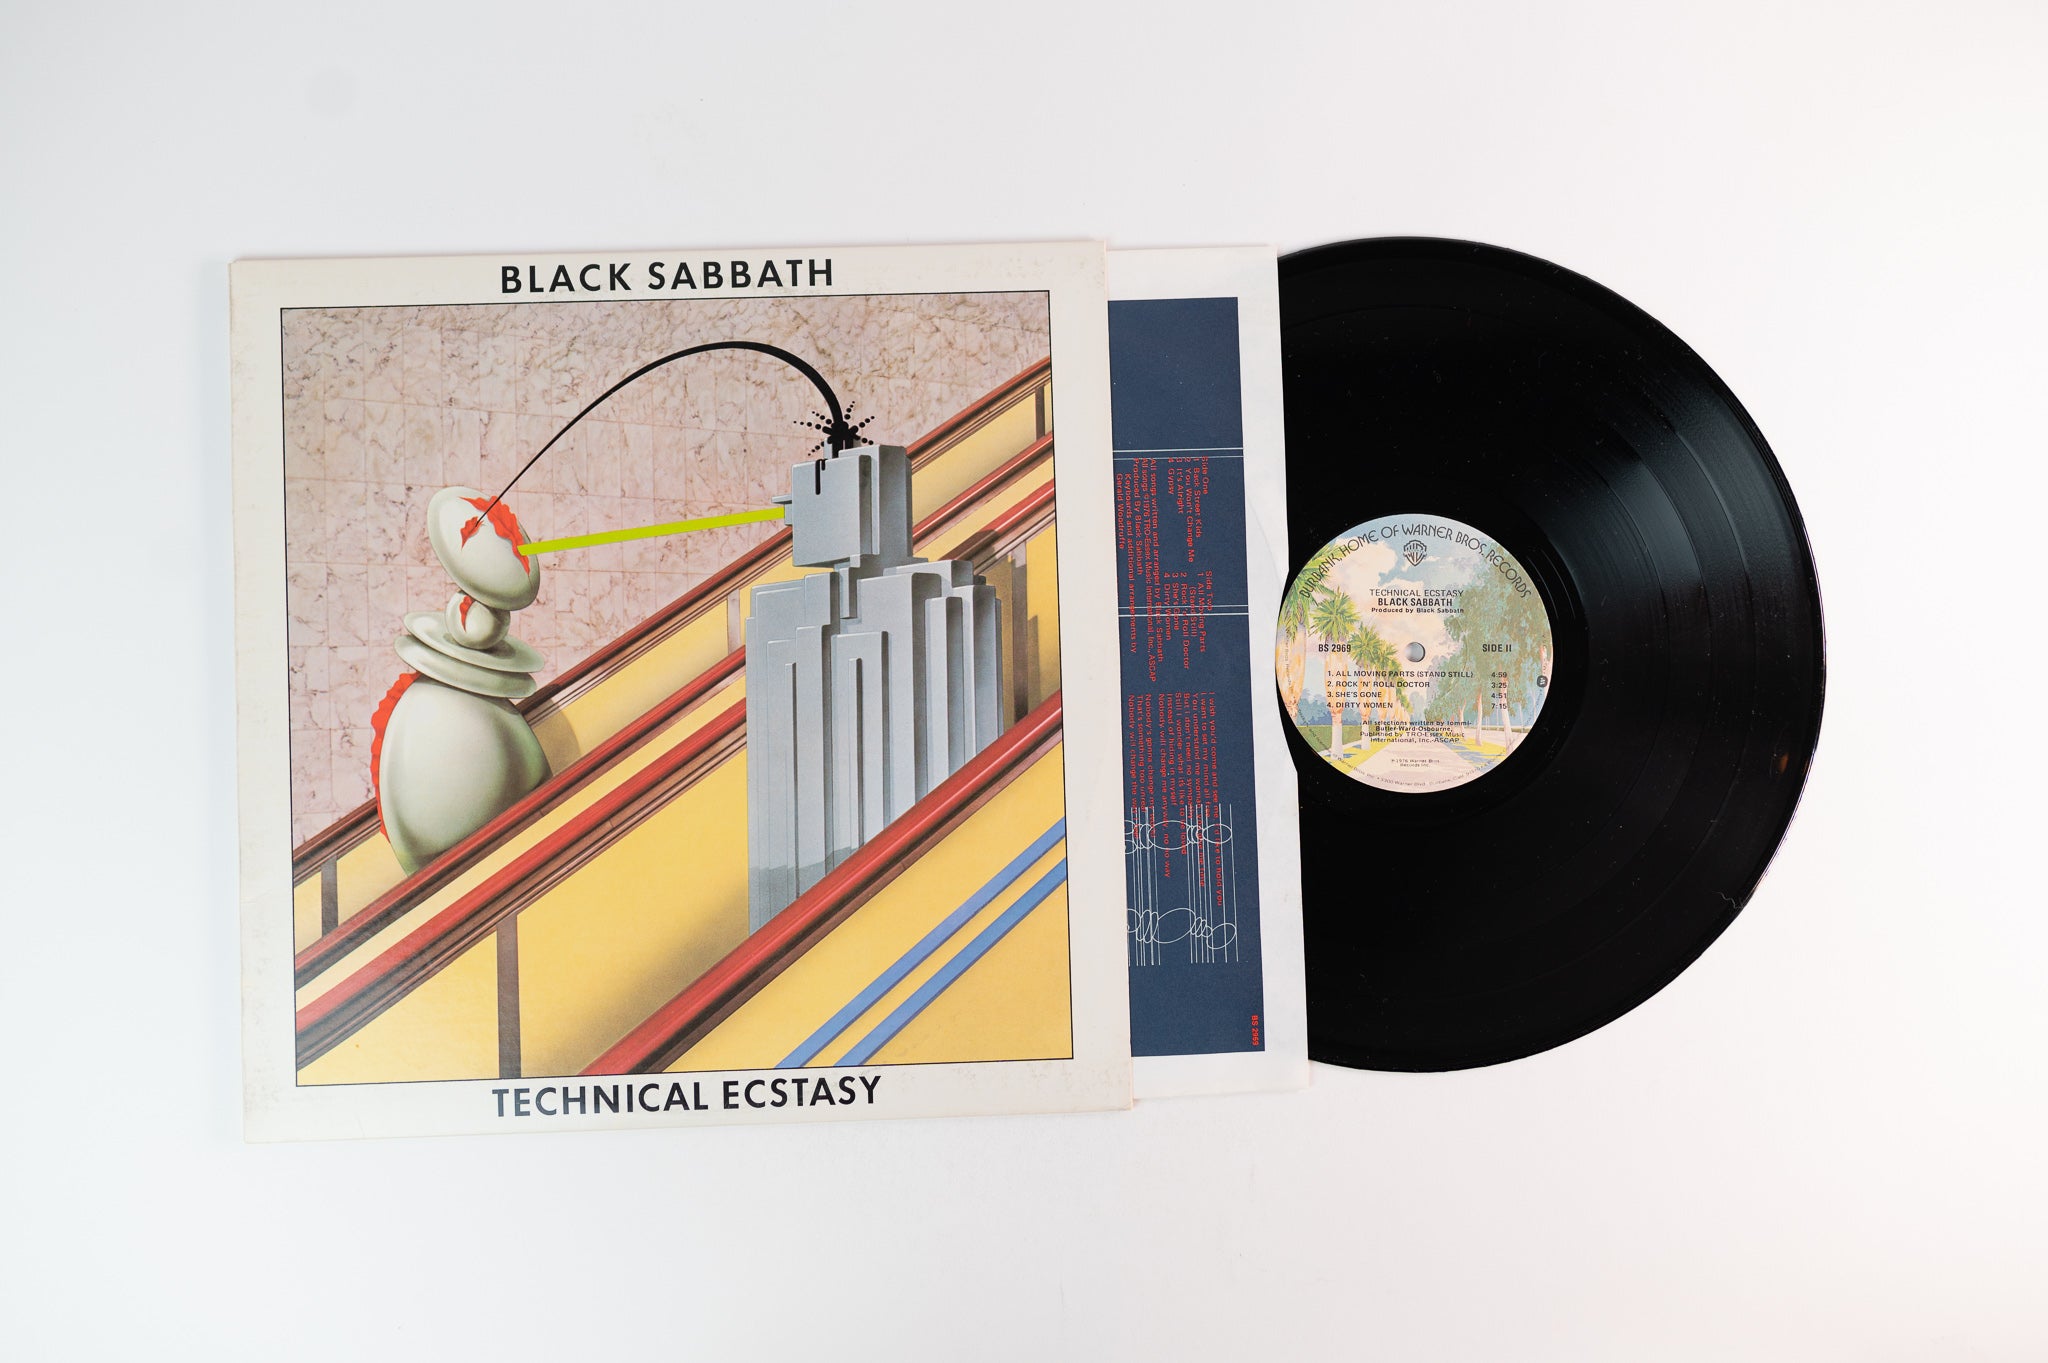 Black Sabbath - Technical Ecstasy on Warner Bros